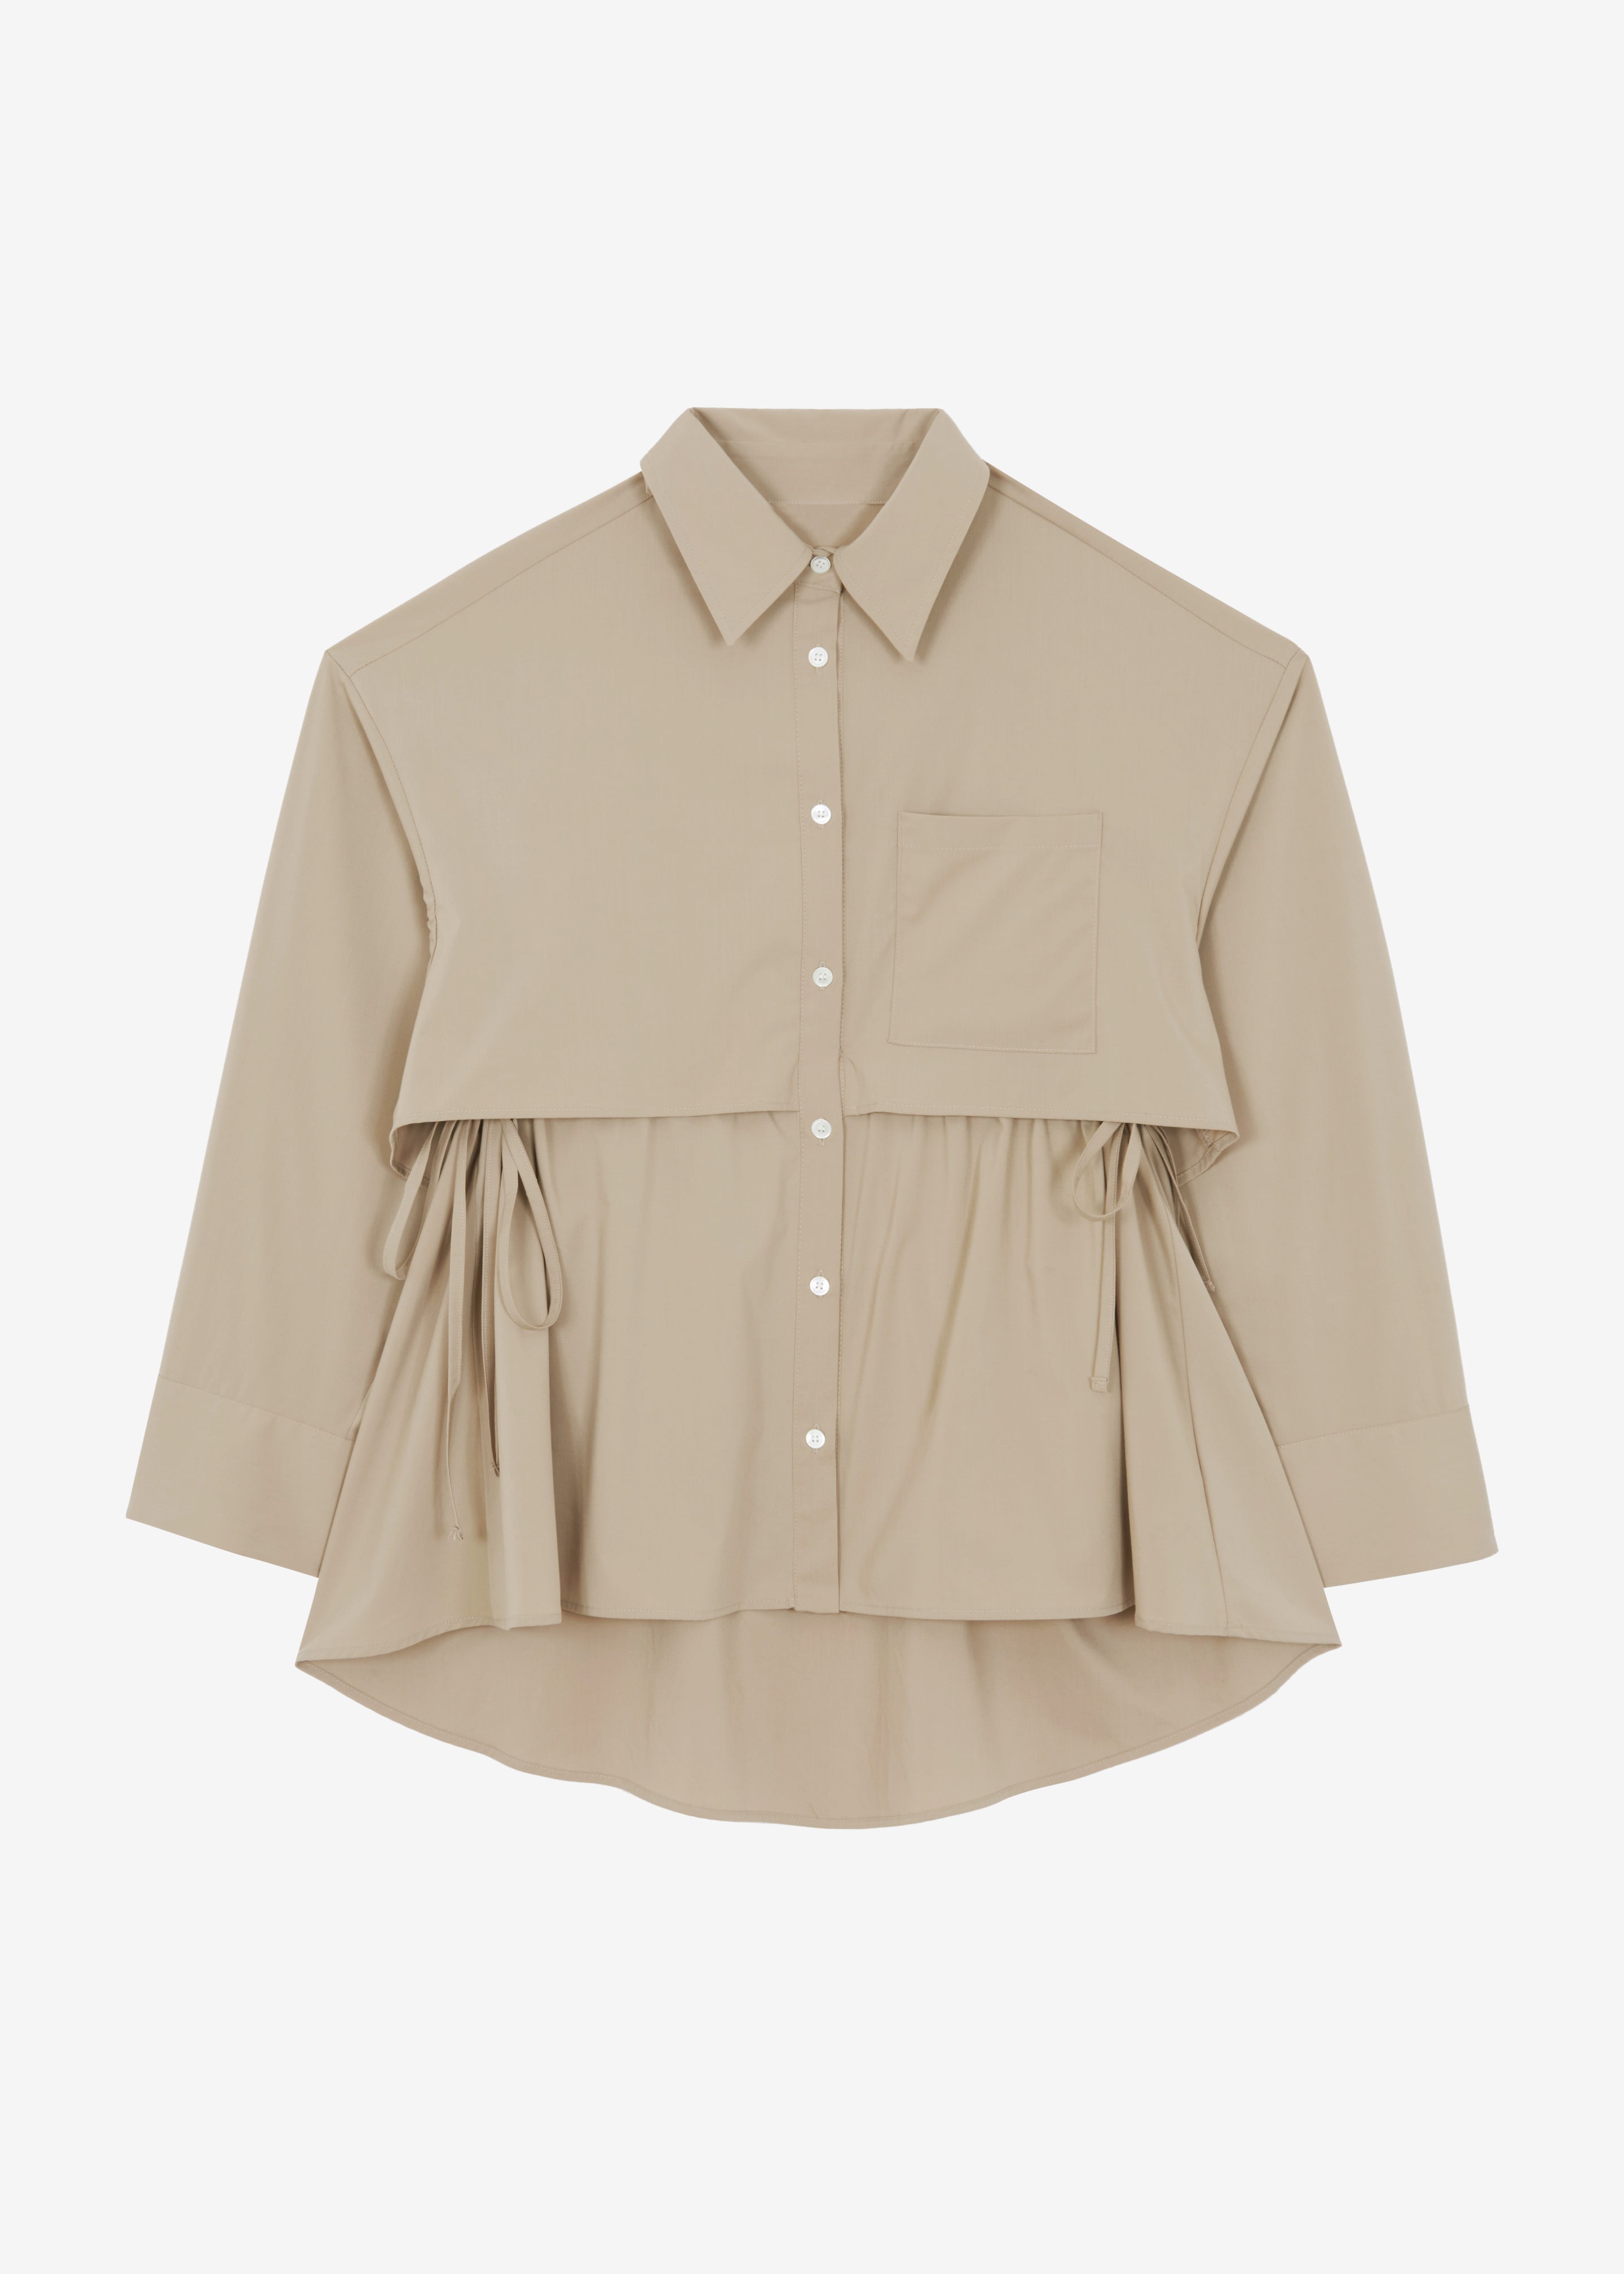 Bria Layered Button Up Shirt - Beige - 10